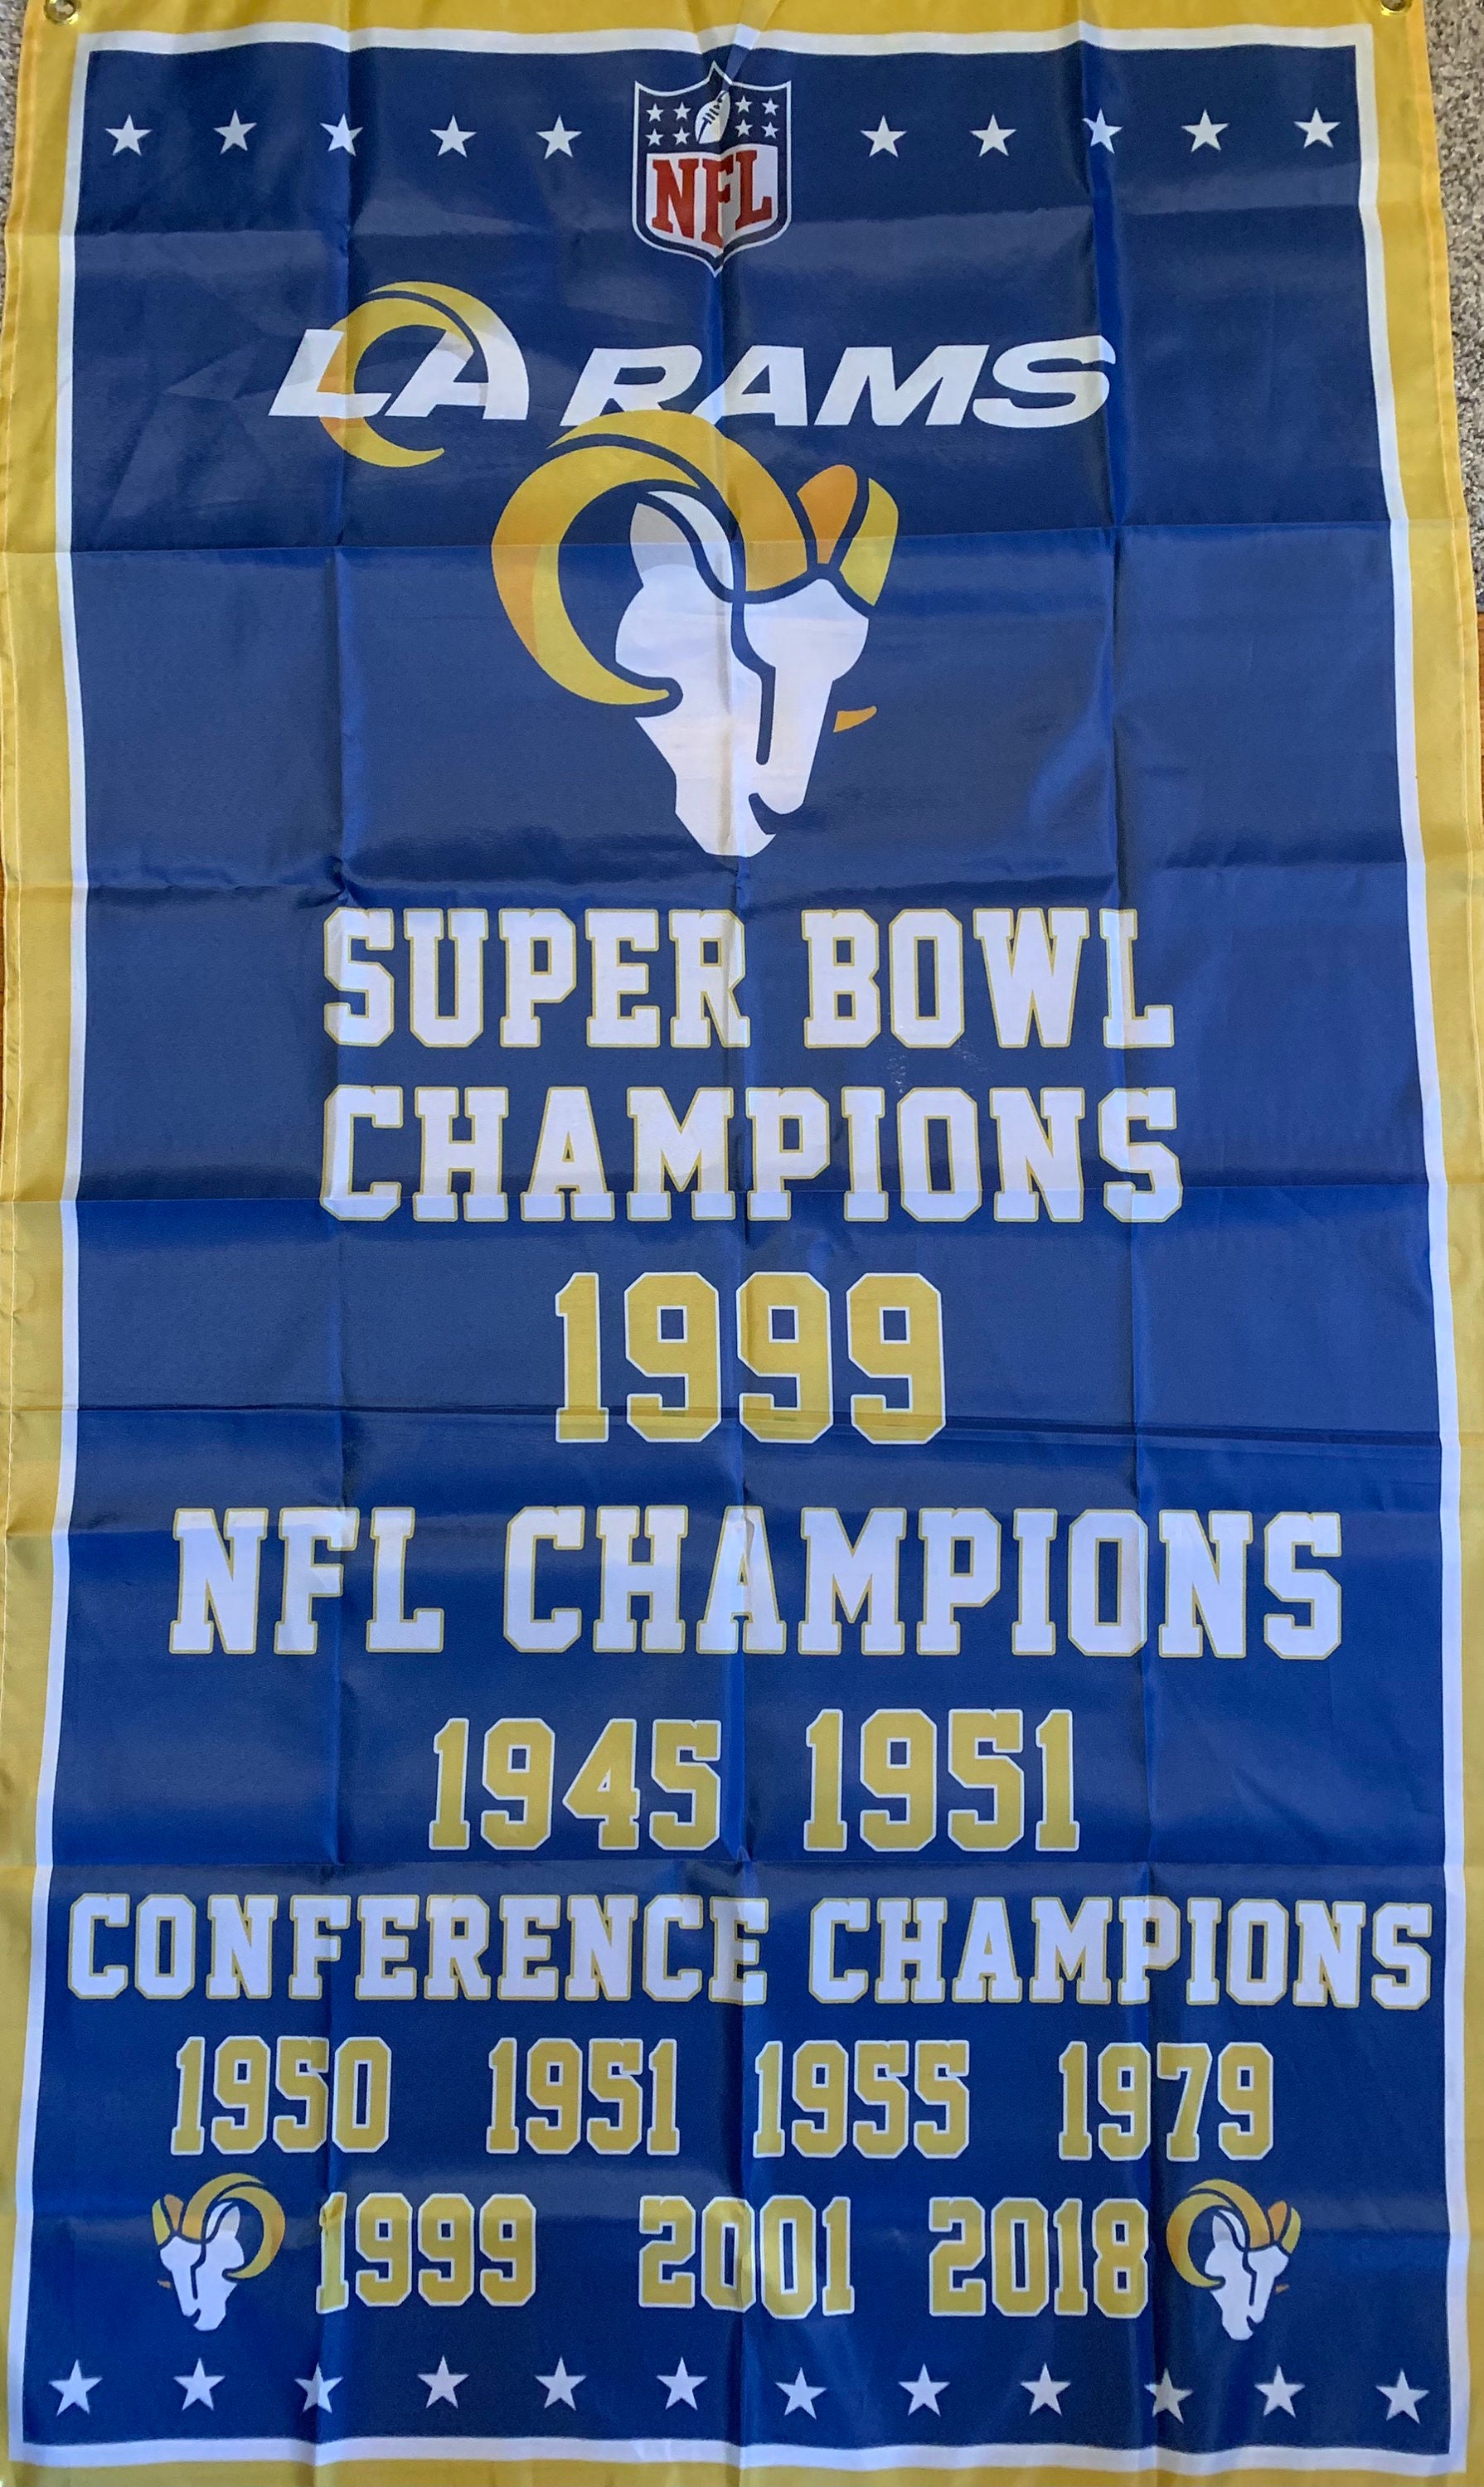 Rams Super Bowl appearances